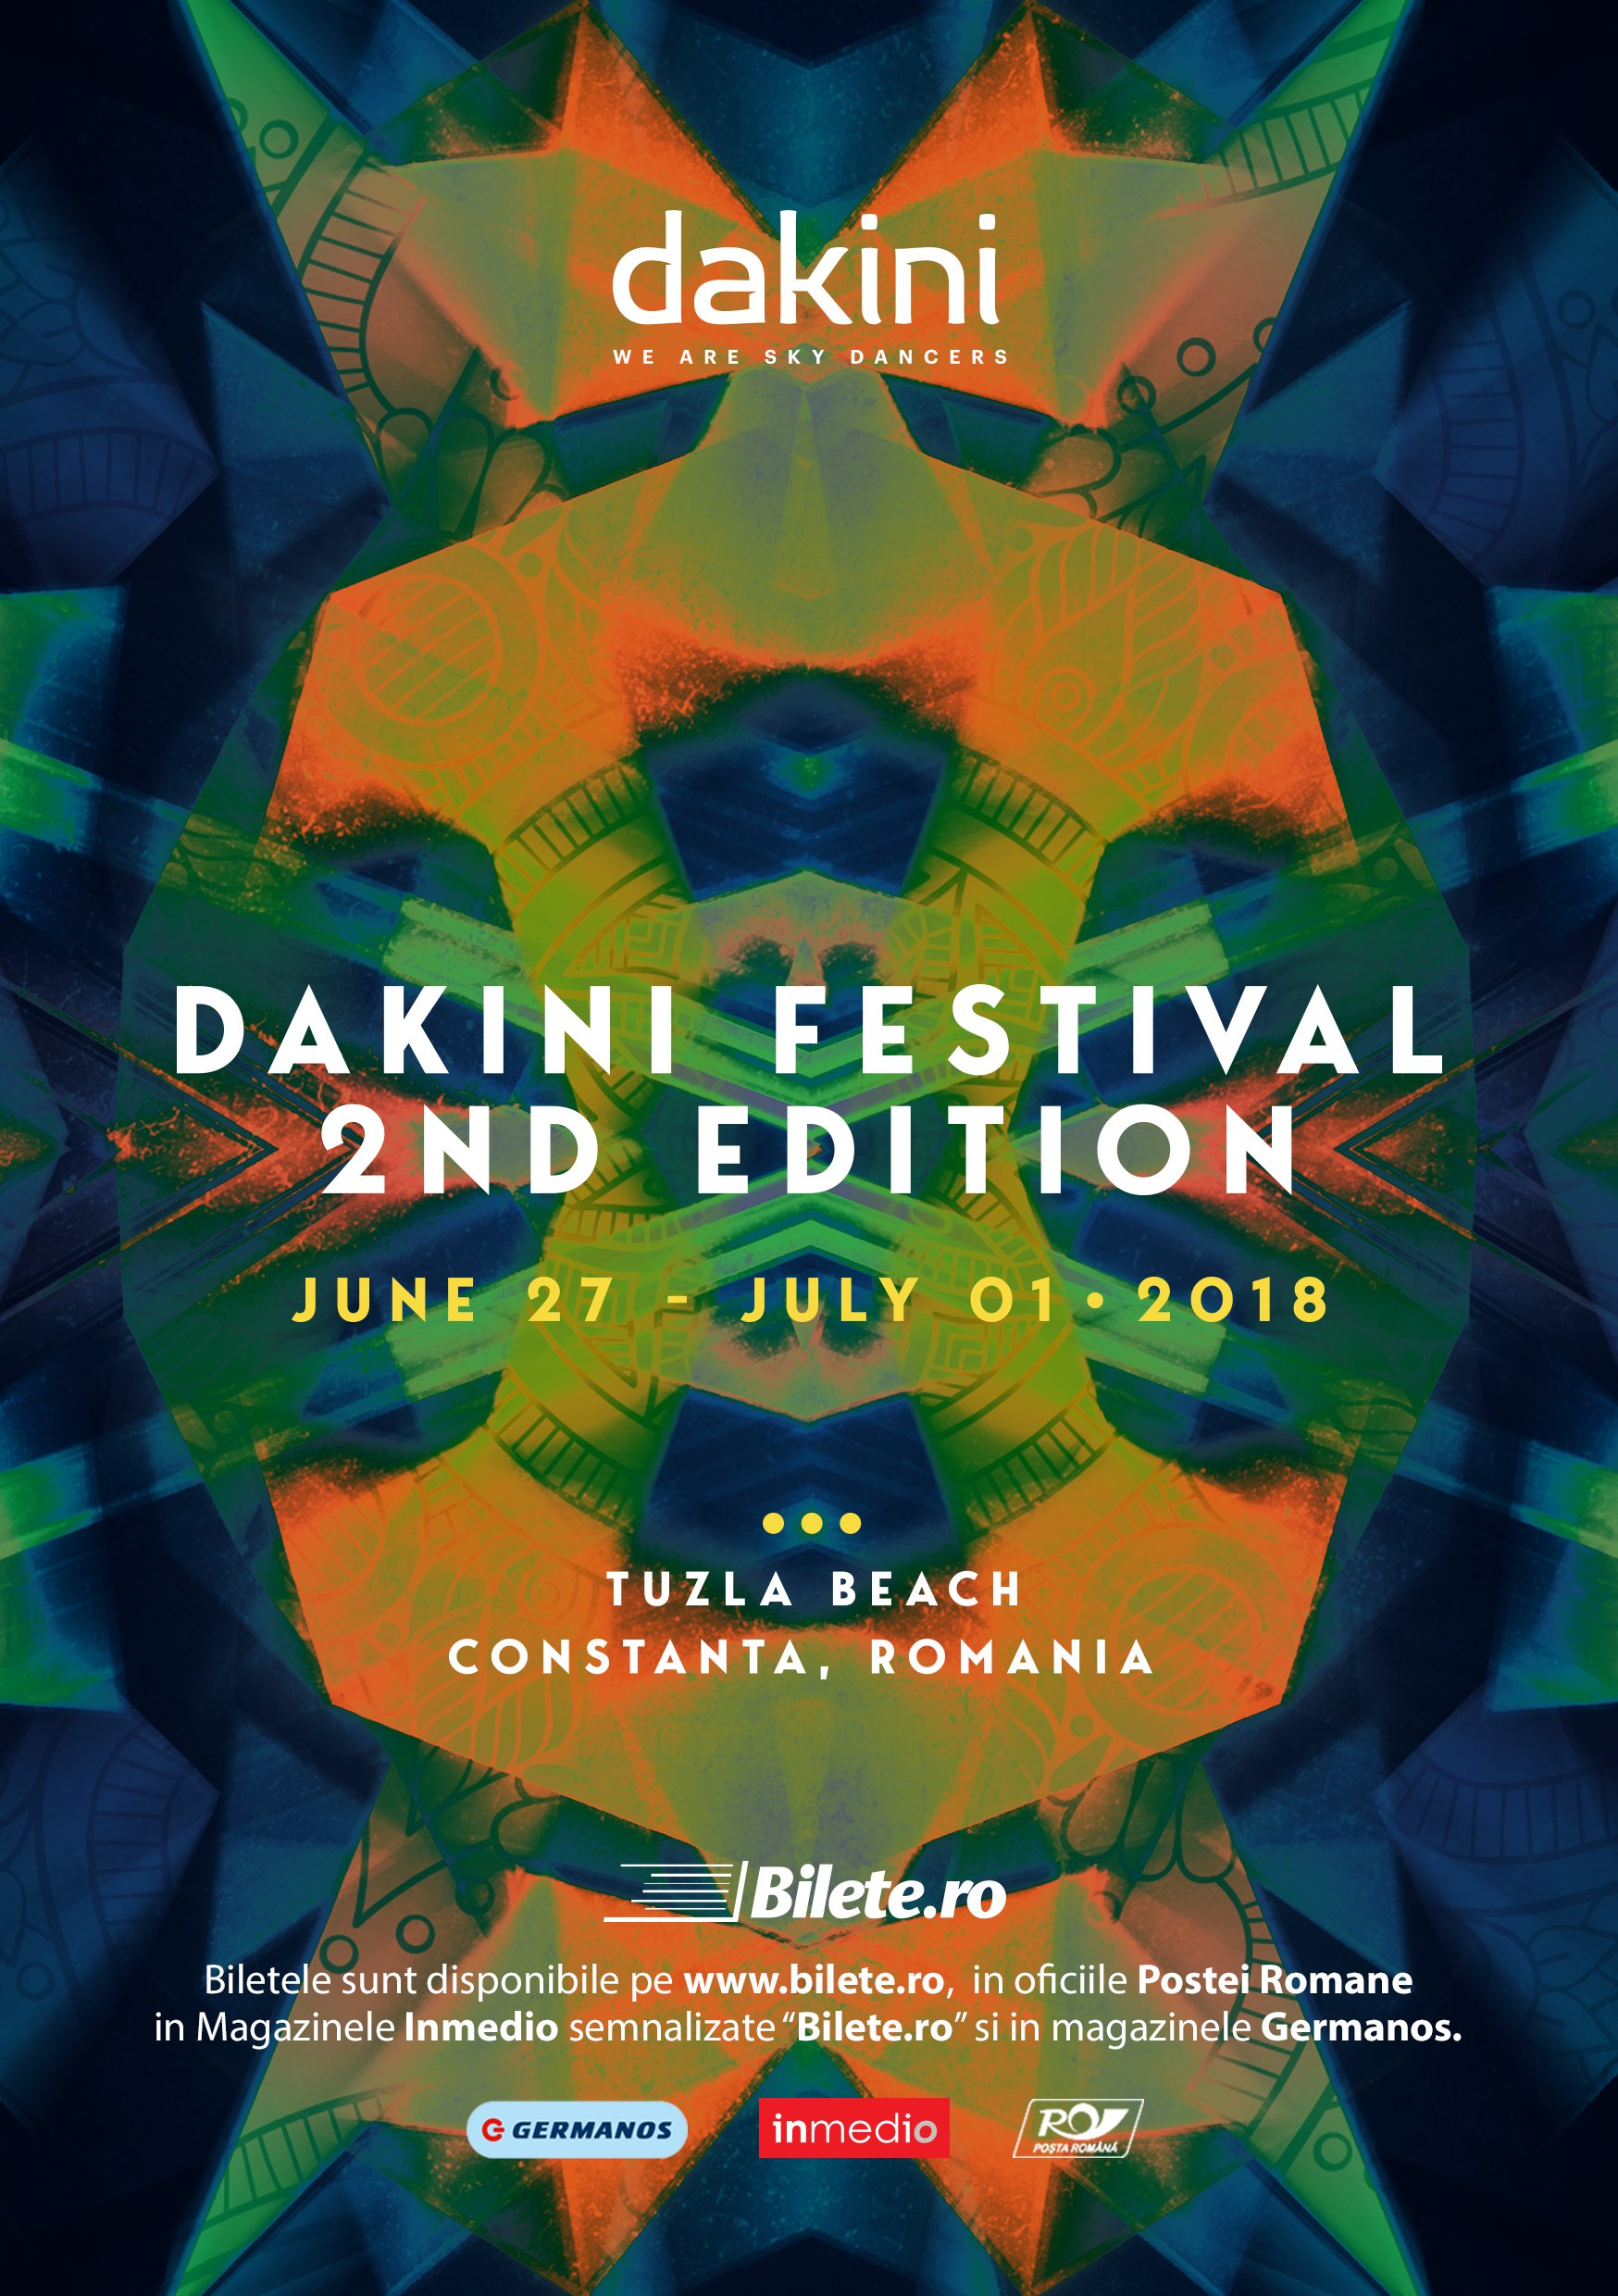 Dakini Festival